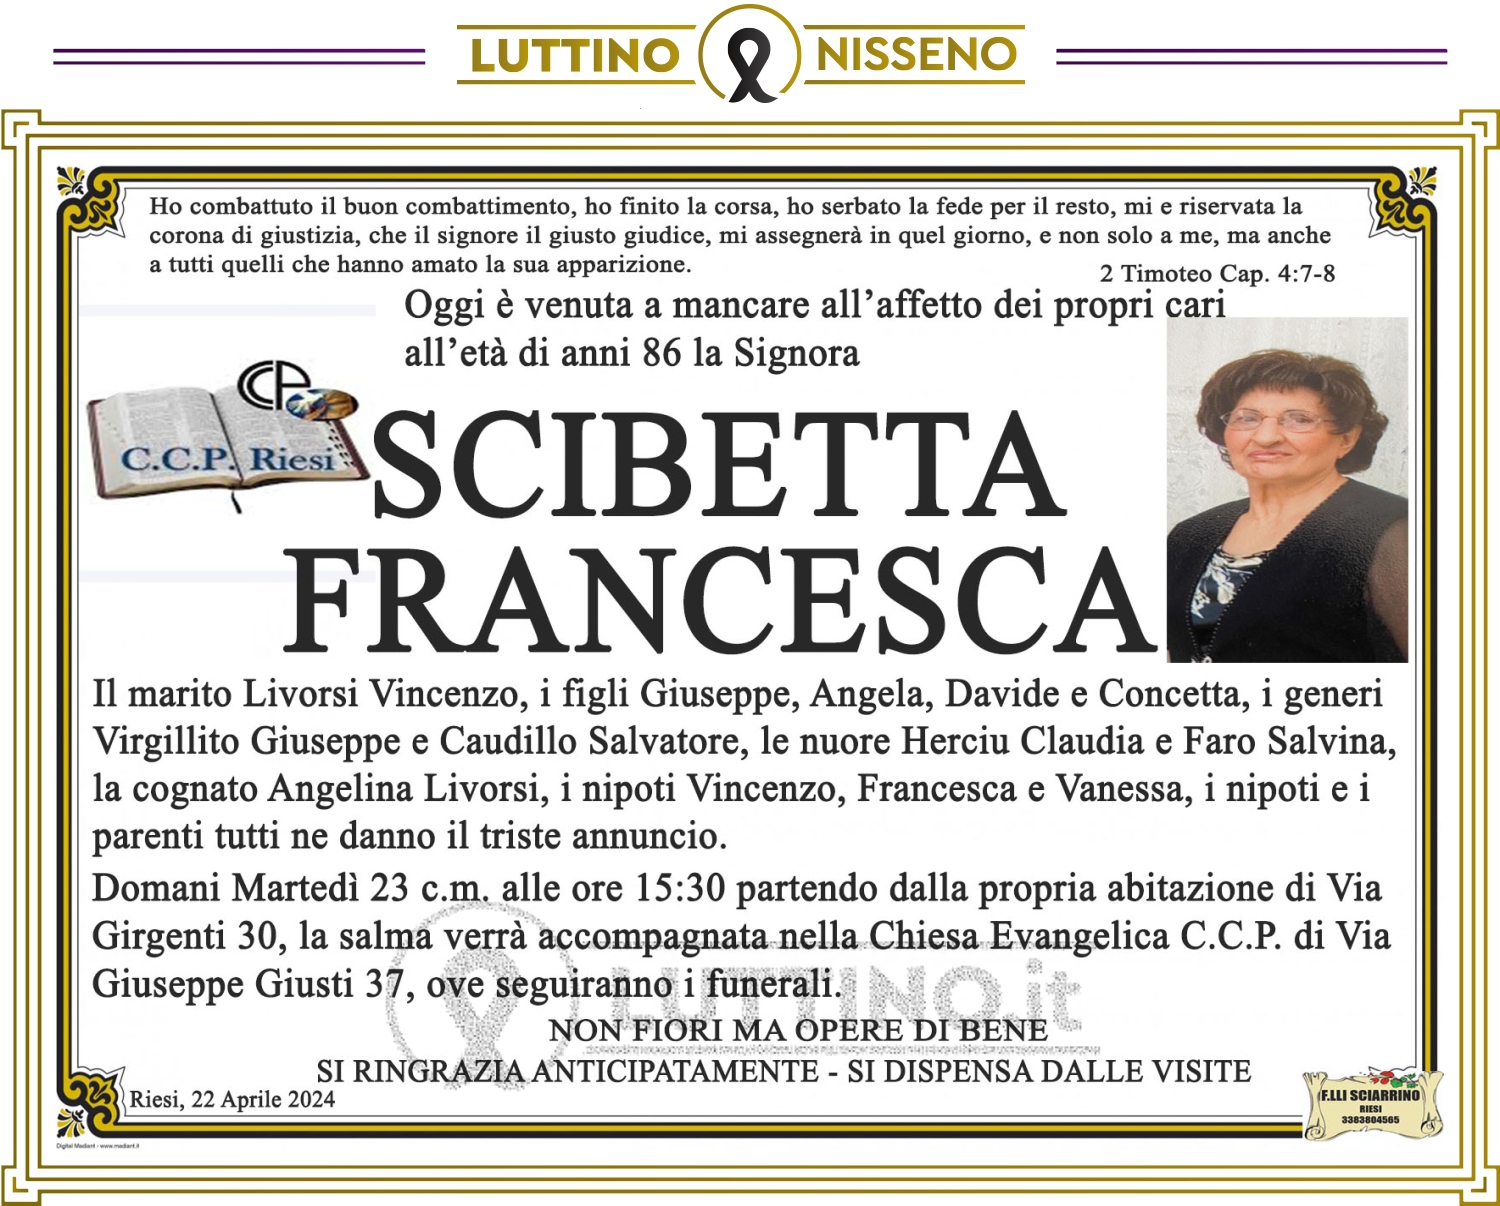 Francesca Scibetta